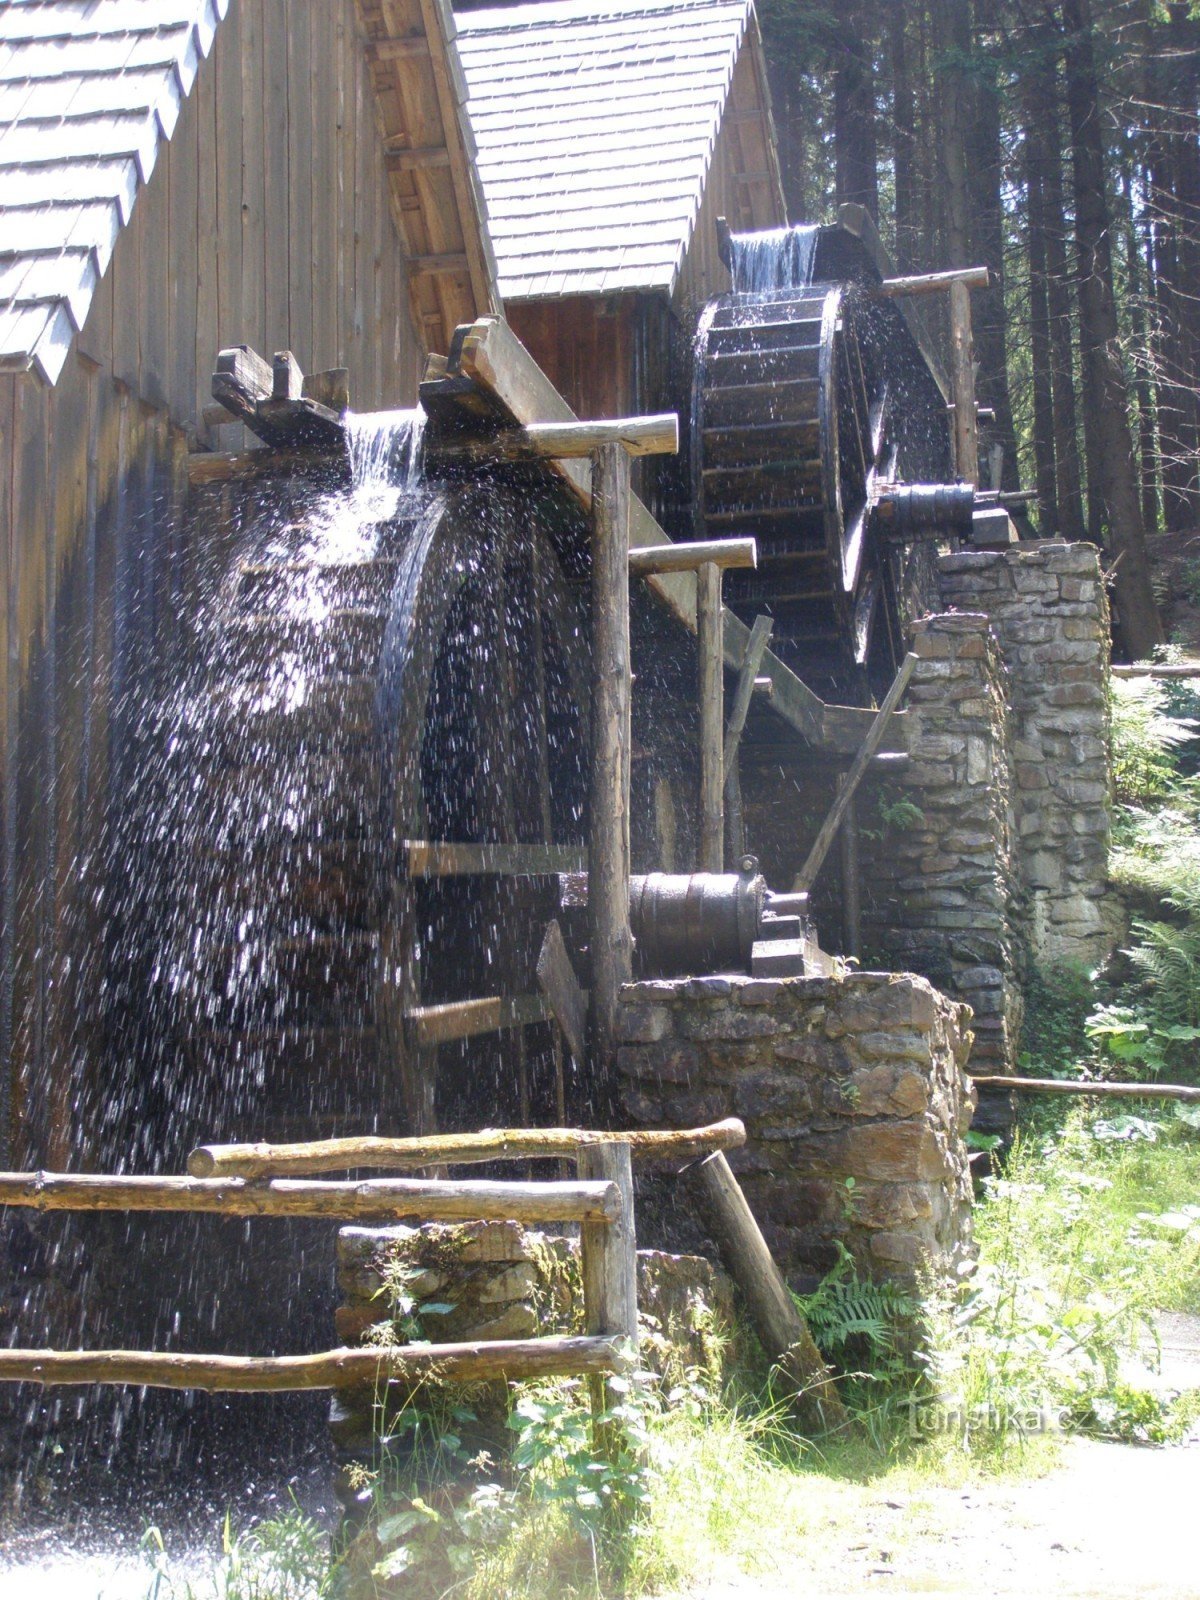 Gold ore mills - open-air mining museum